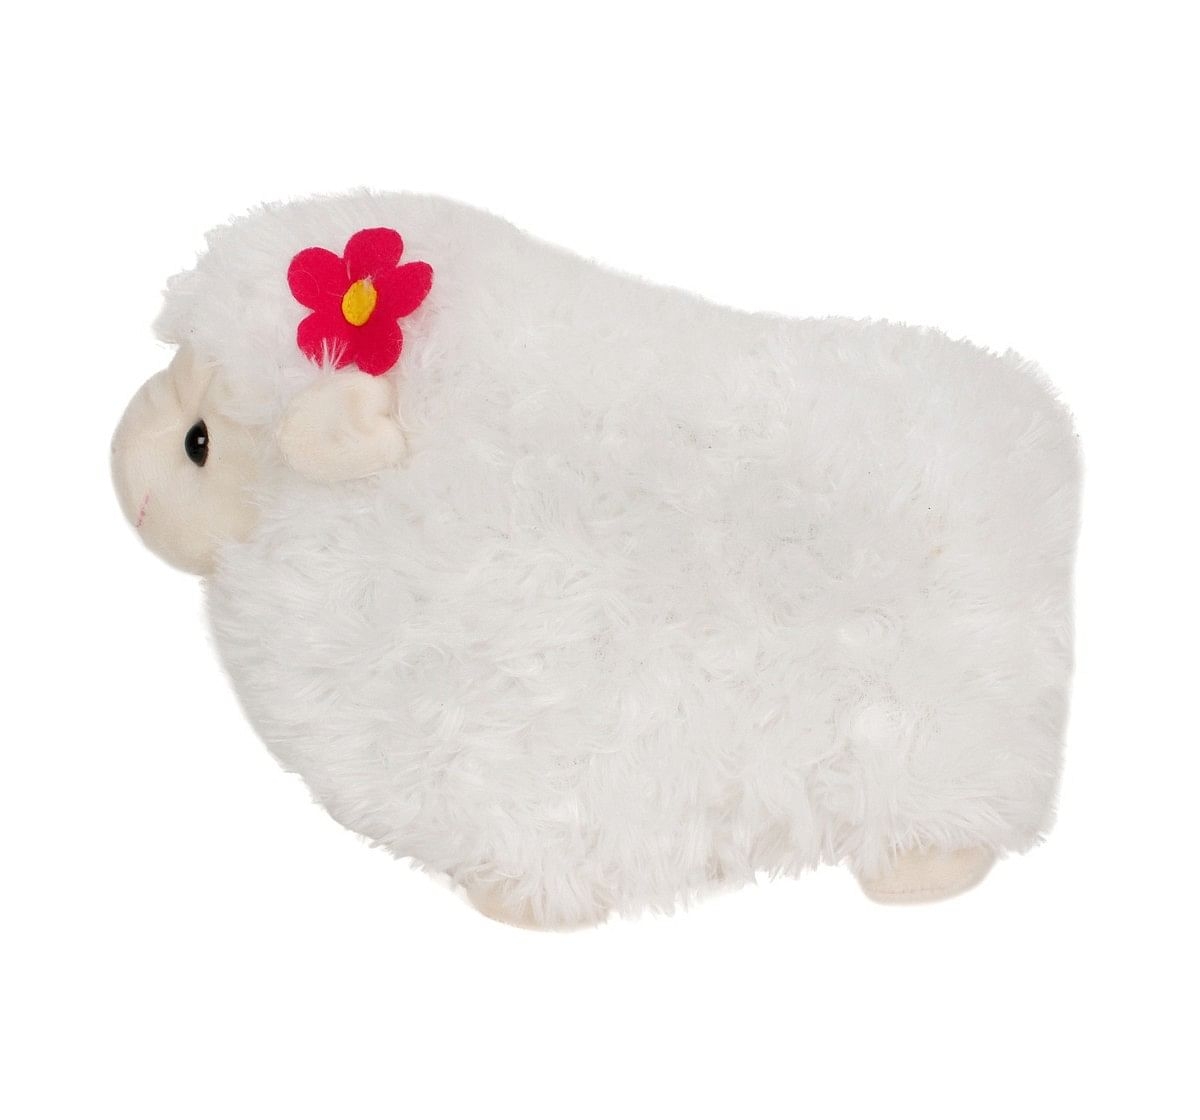 Fuzzbuzz White Lamb Stuffed Animal - 28Cm Quirky Soft Toys for Kids age 0M+ - 20 Cm (White)